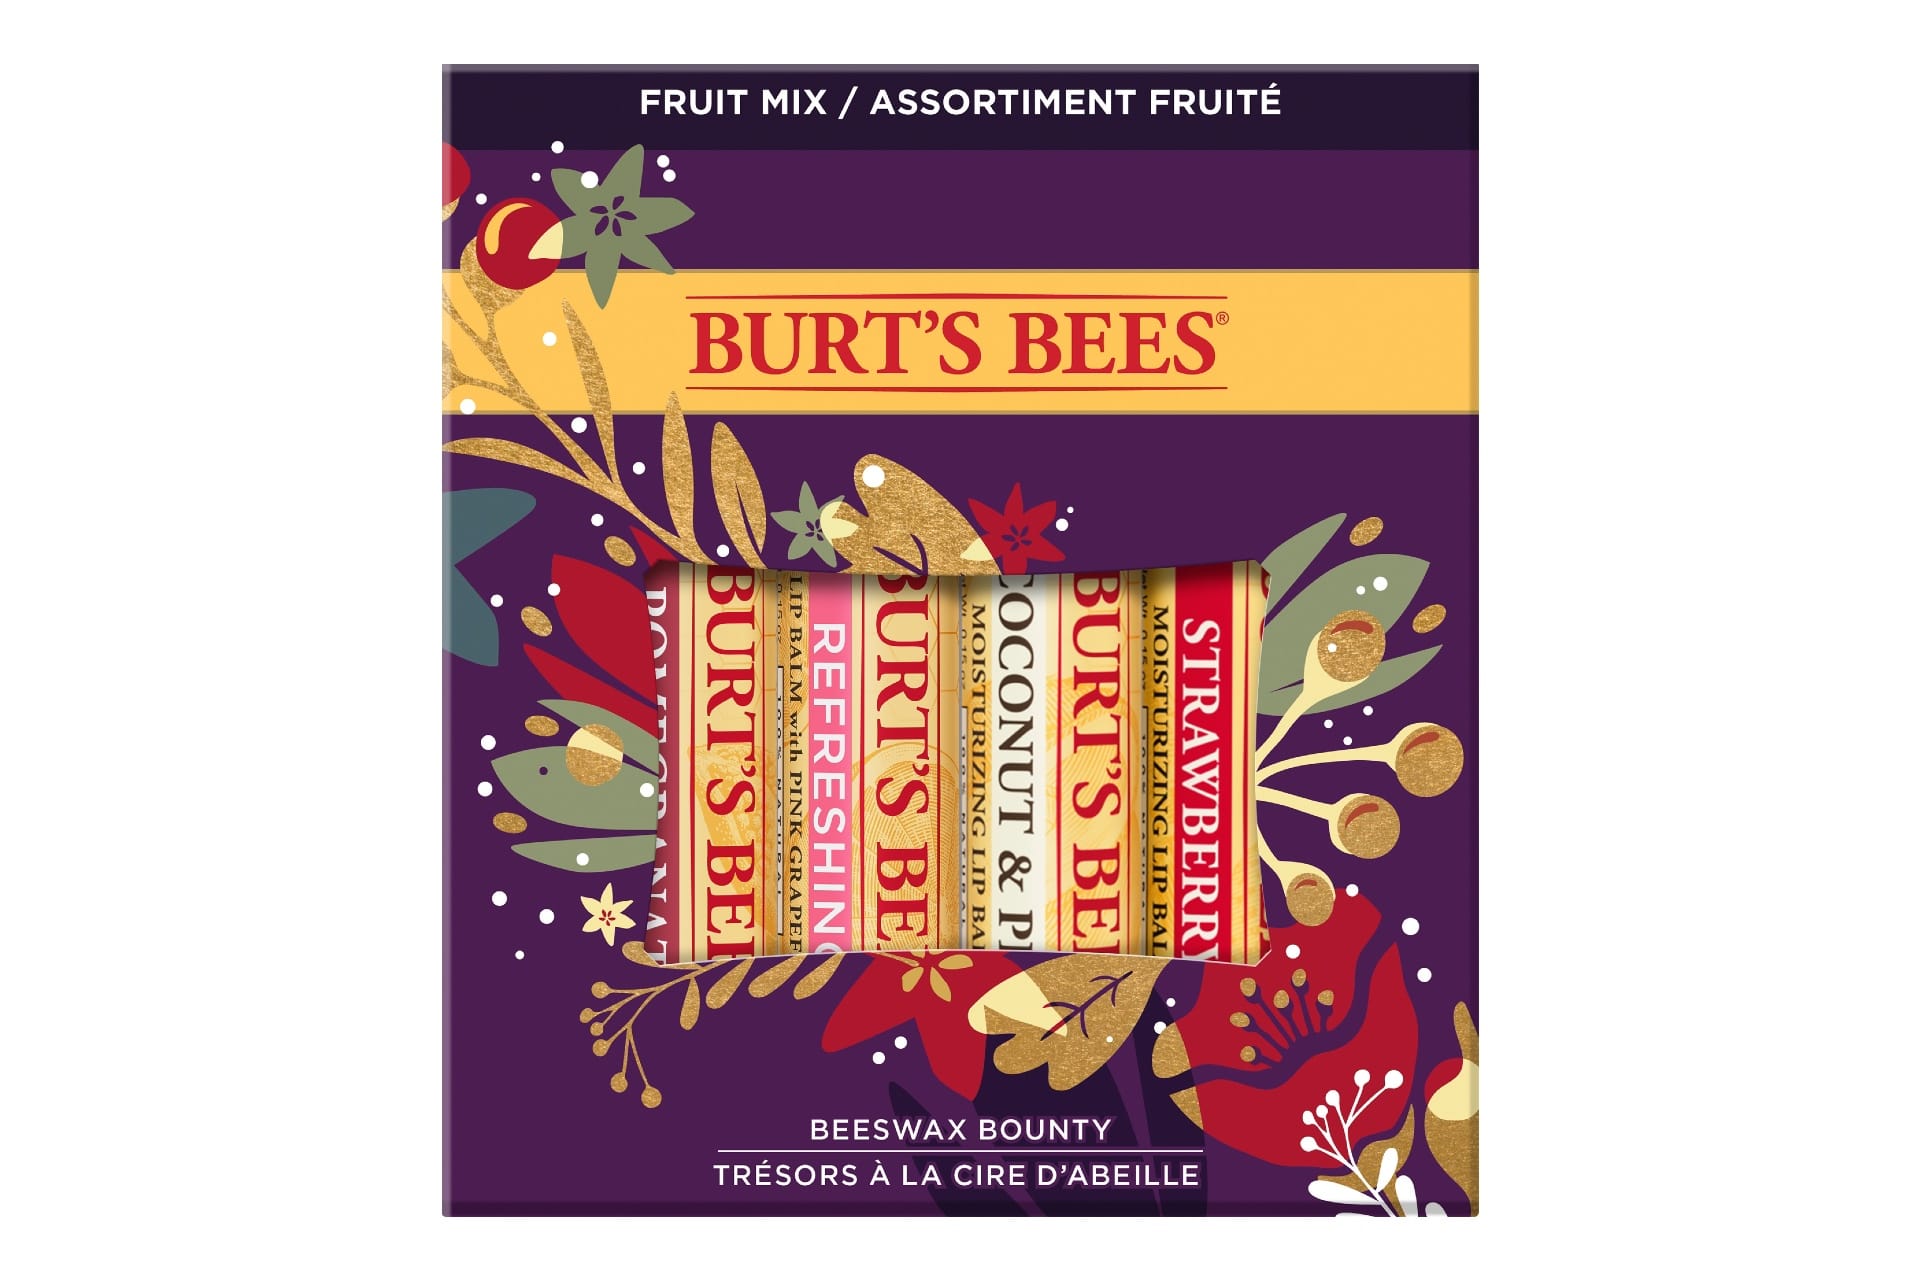 pack of fruit-flavoured burt's bees lip balms